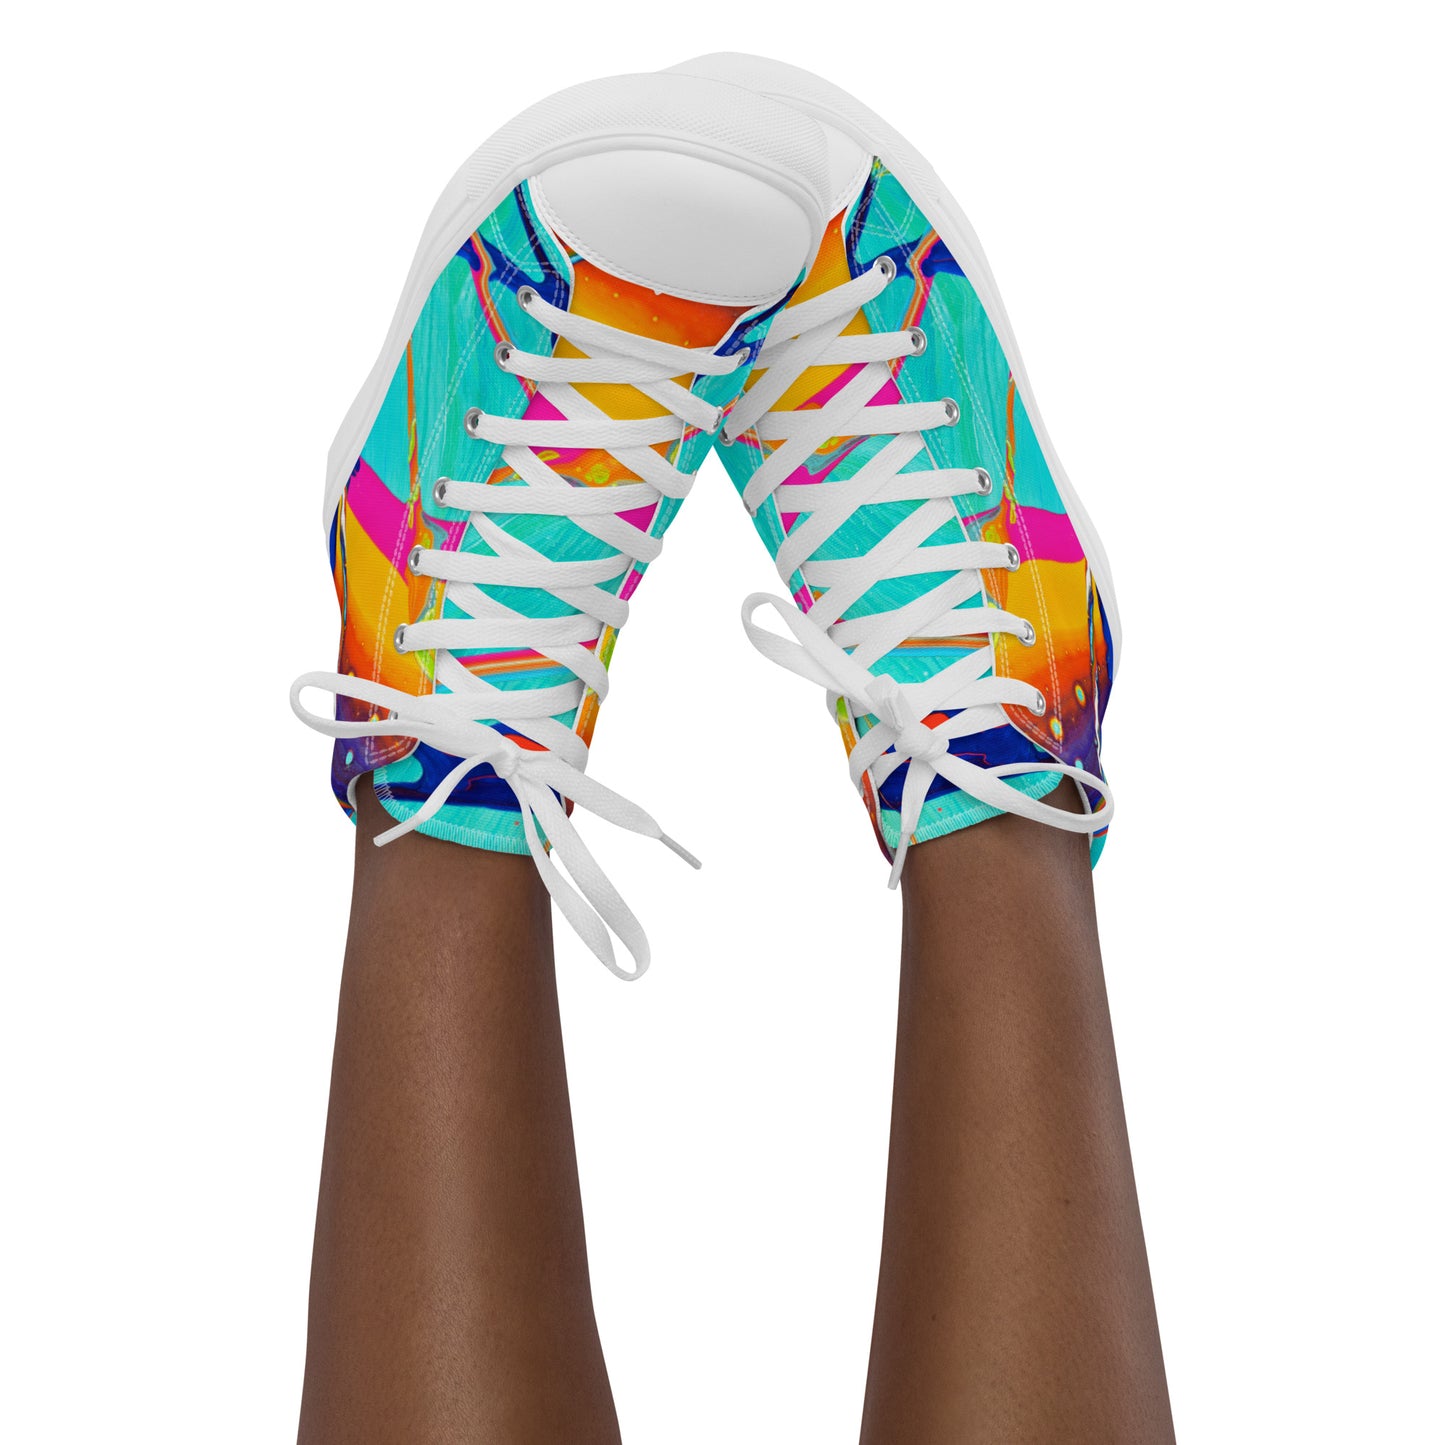 Women’s high top canvas shoes - Rainbow design